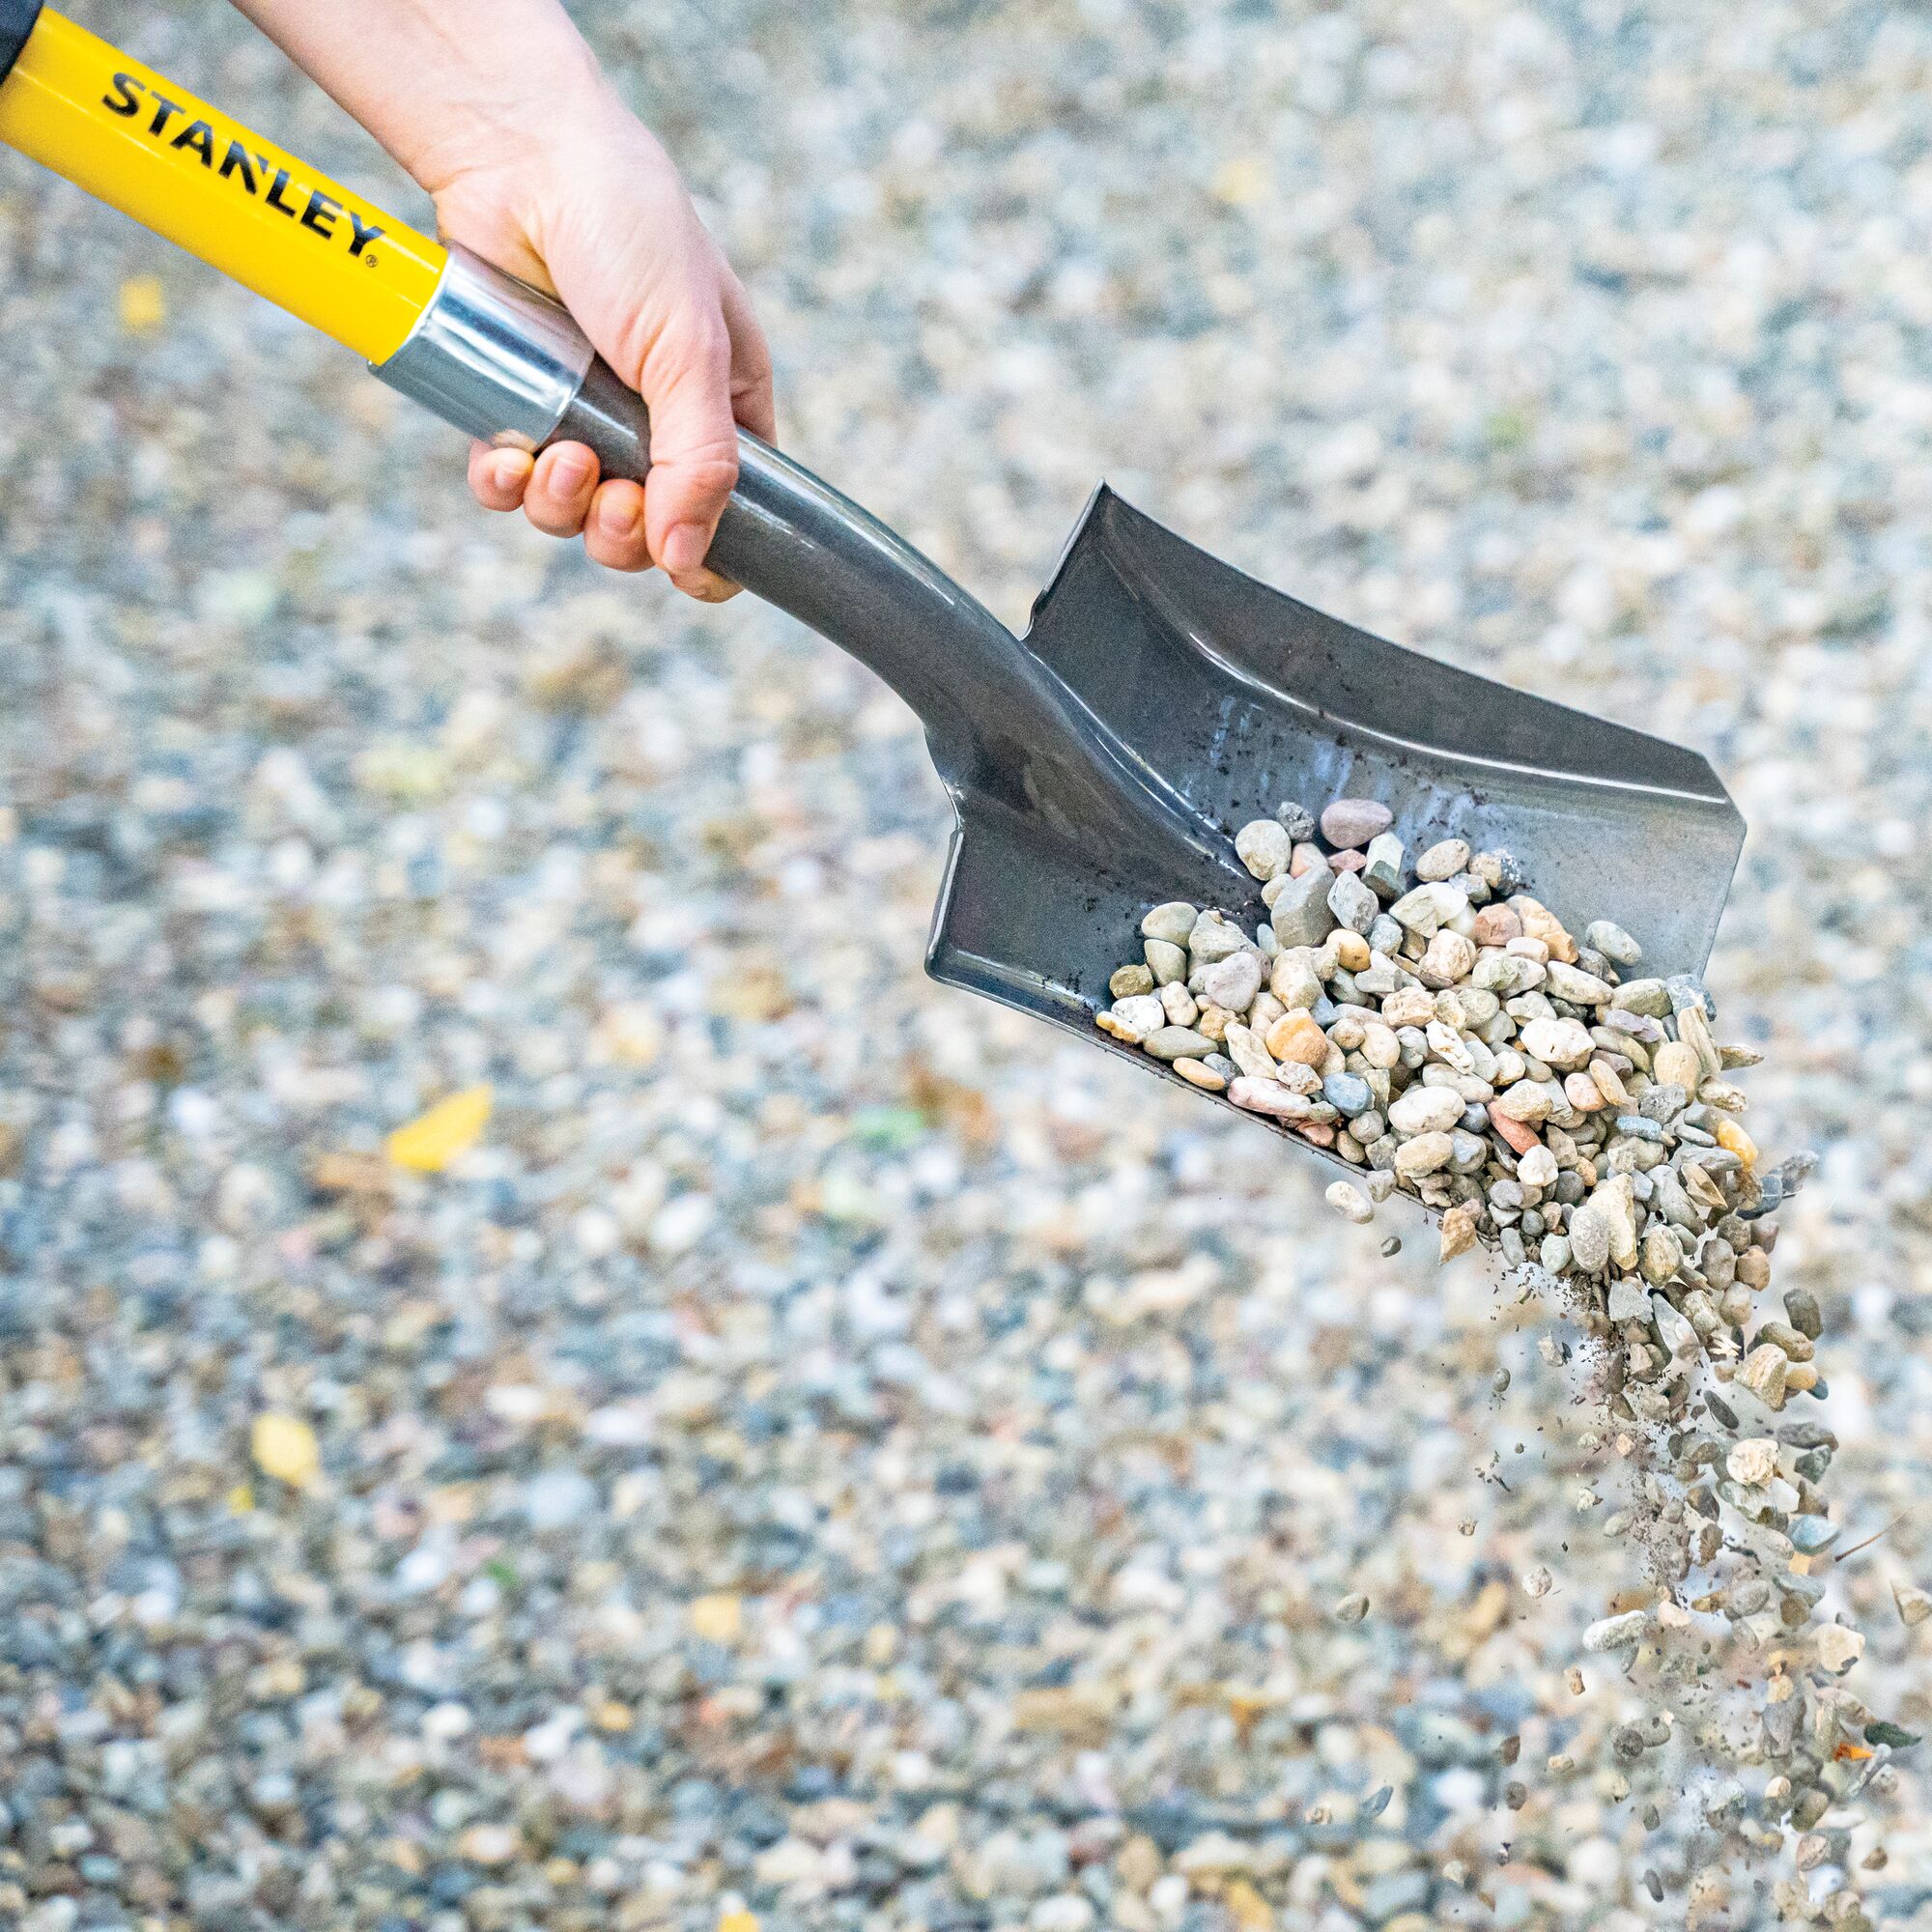 Mini D square head shovel holding granulated materials.